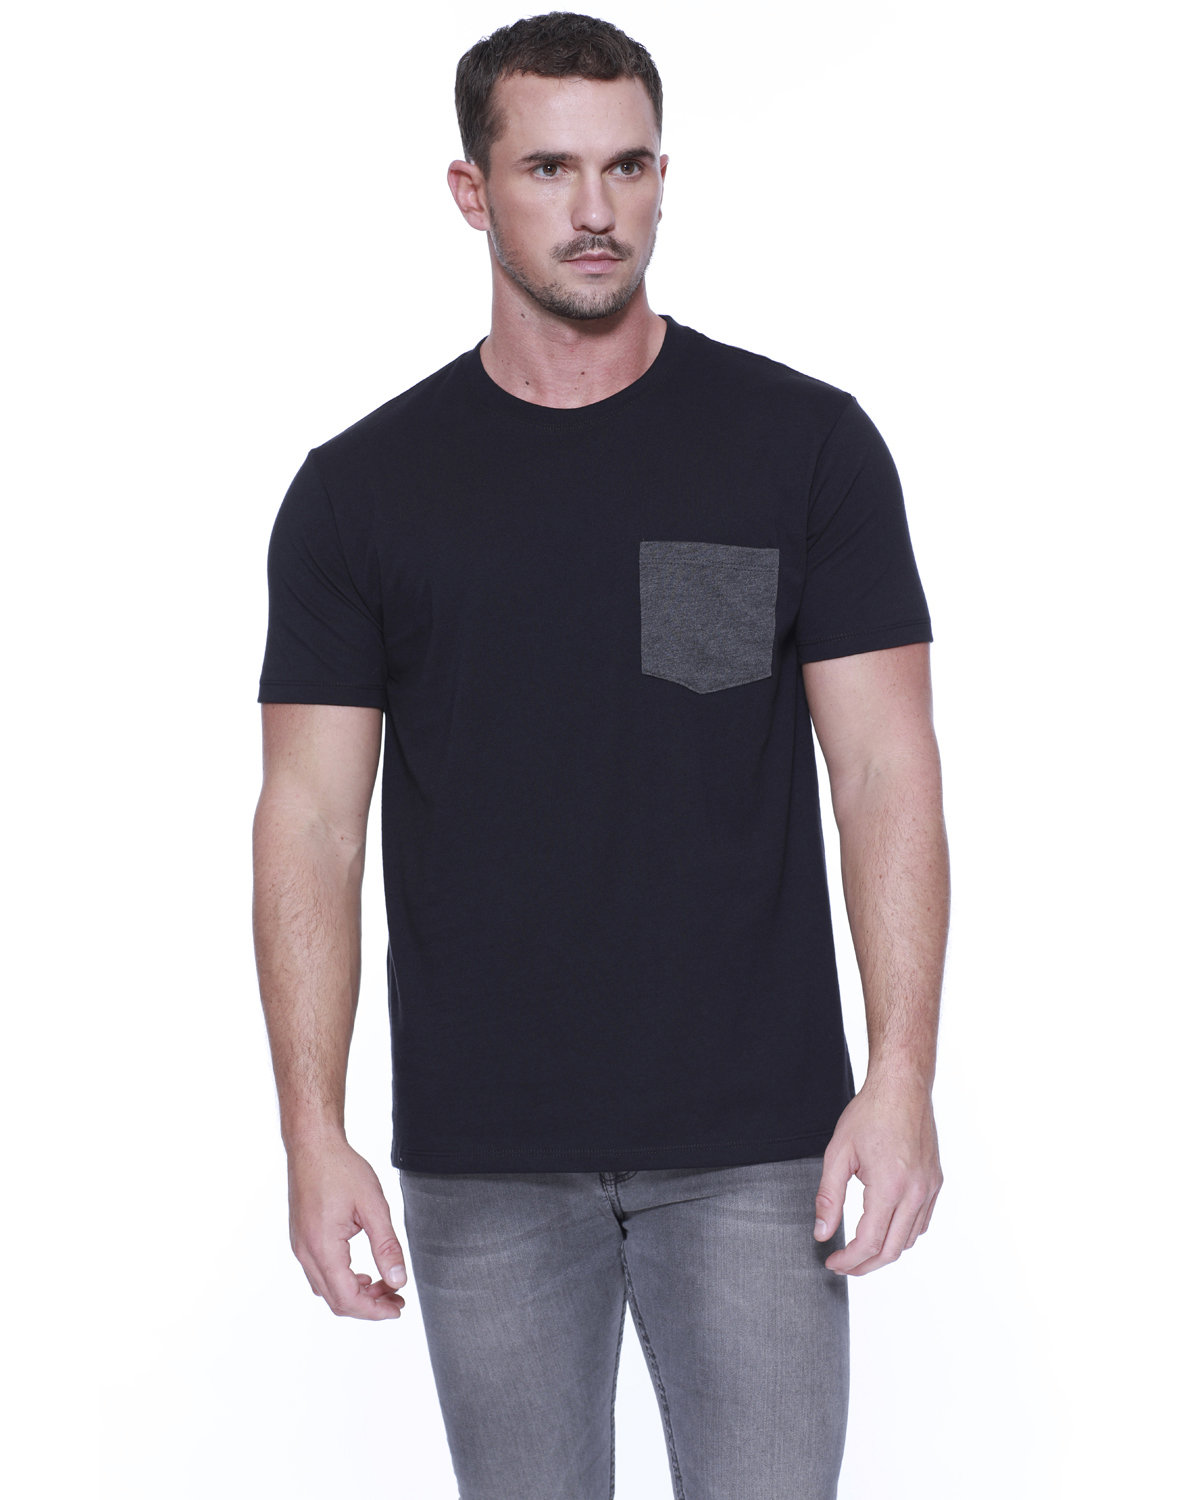 StarTee Men's CVC Pocket T-Shirt BLACK/ CHRCL HTH 